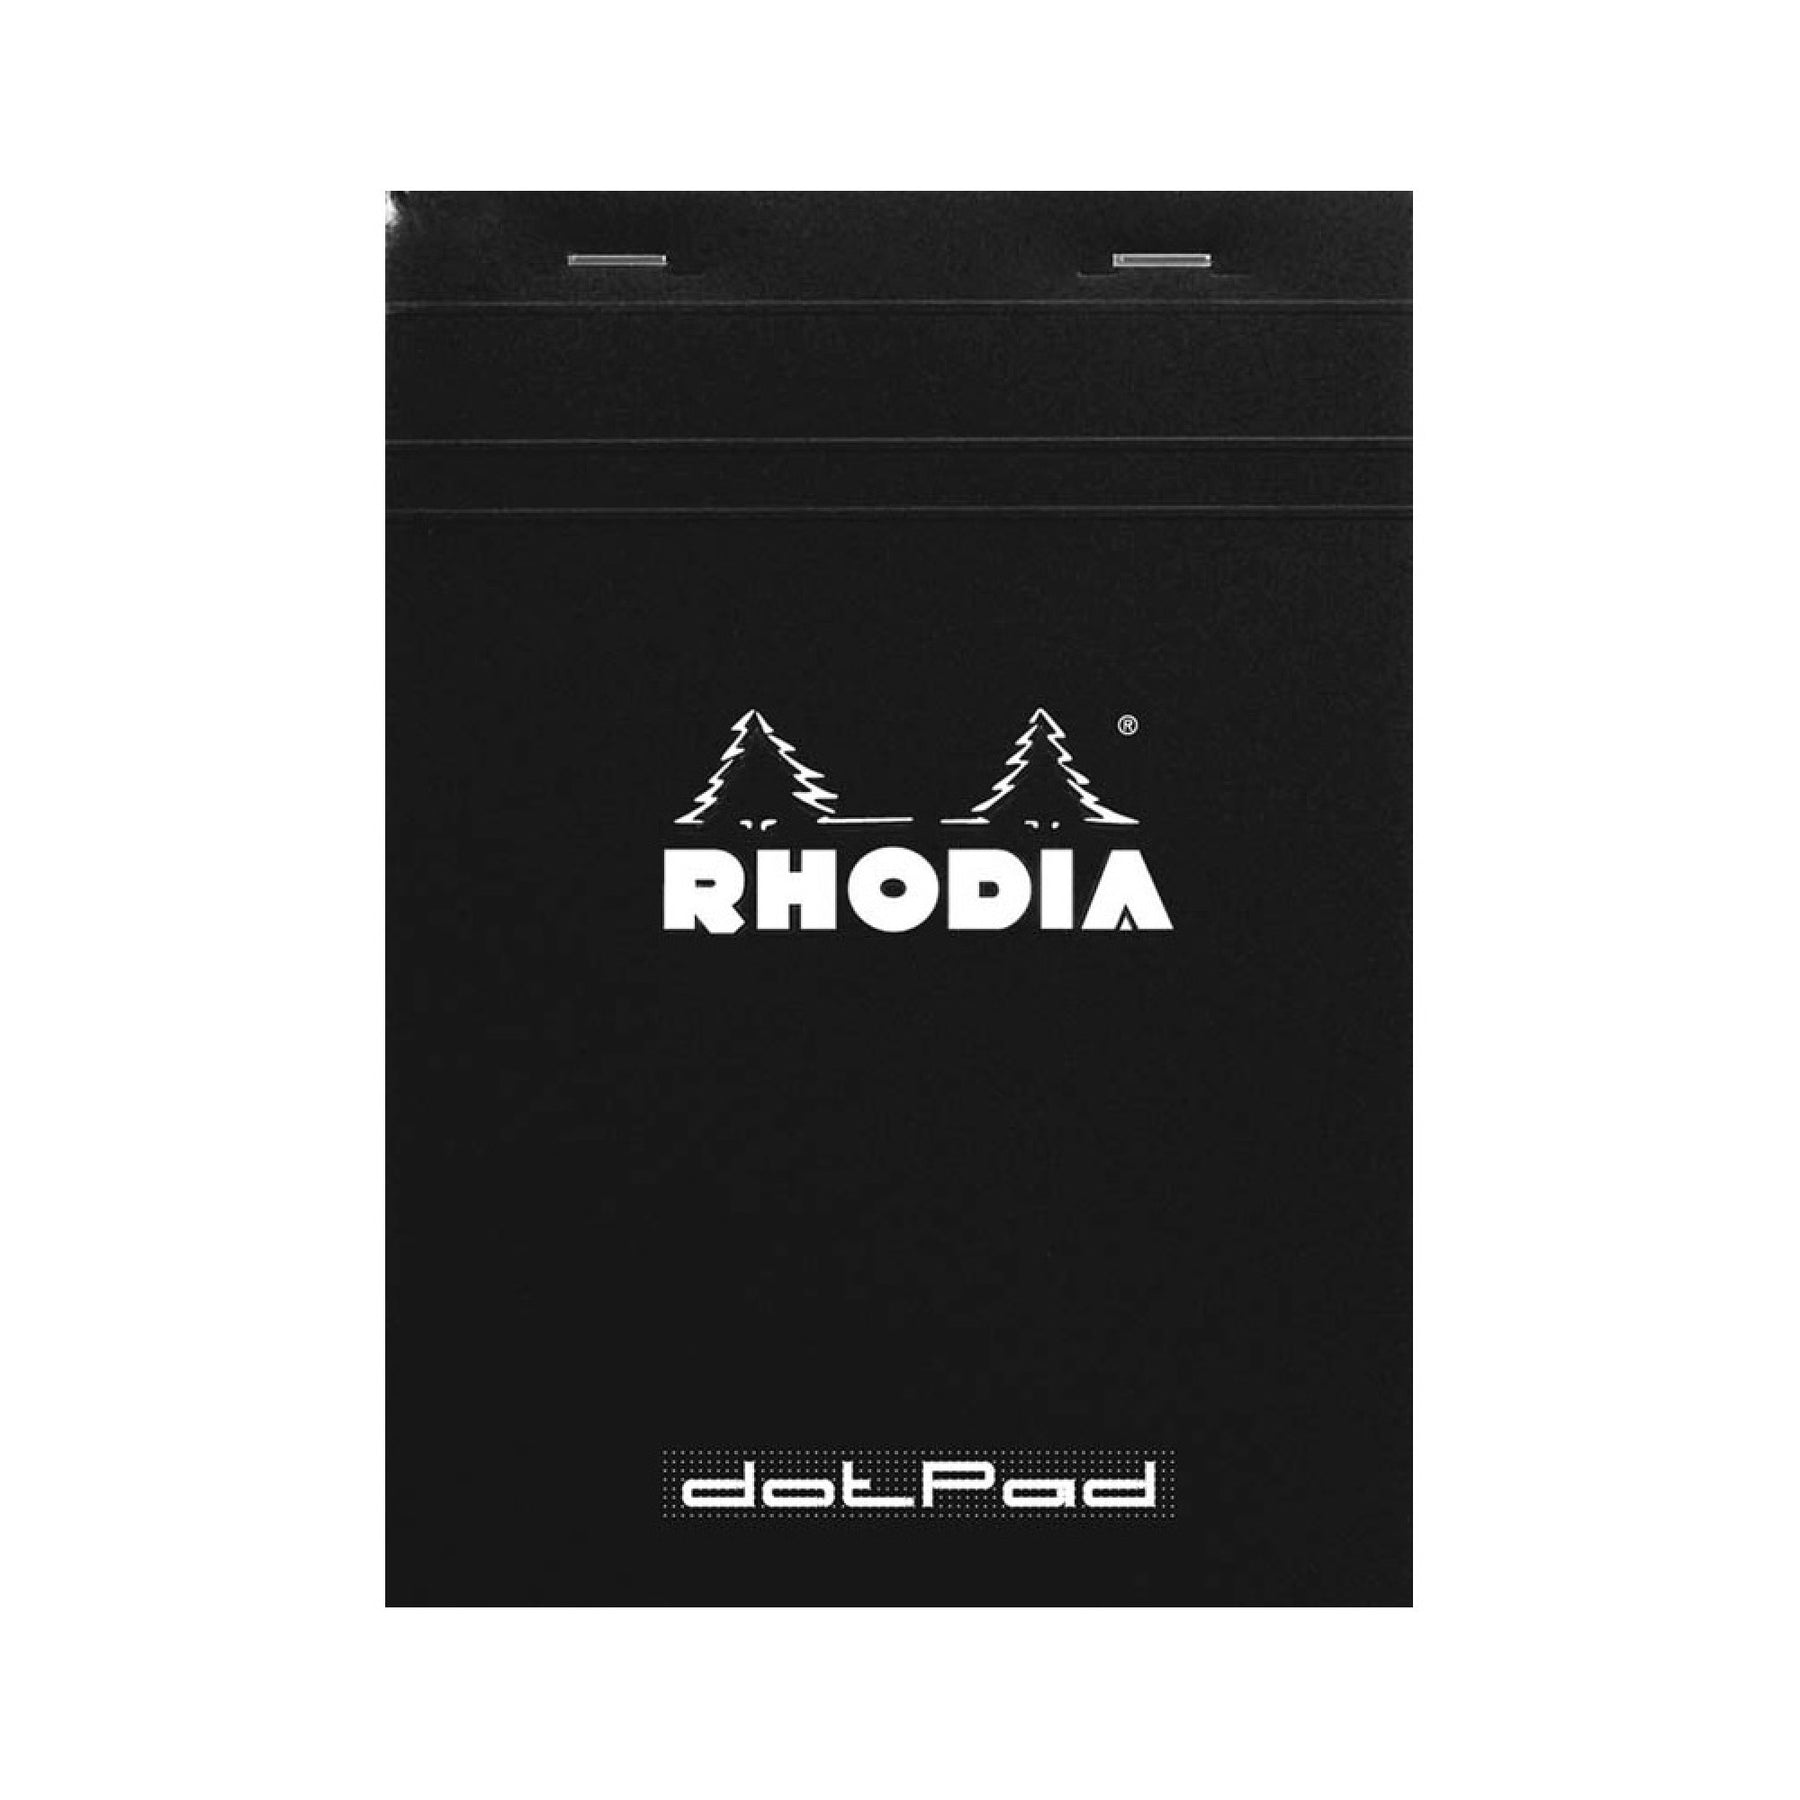 Rhodia #16 Black